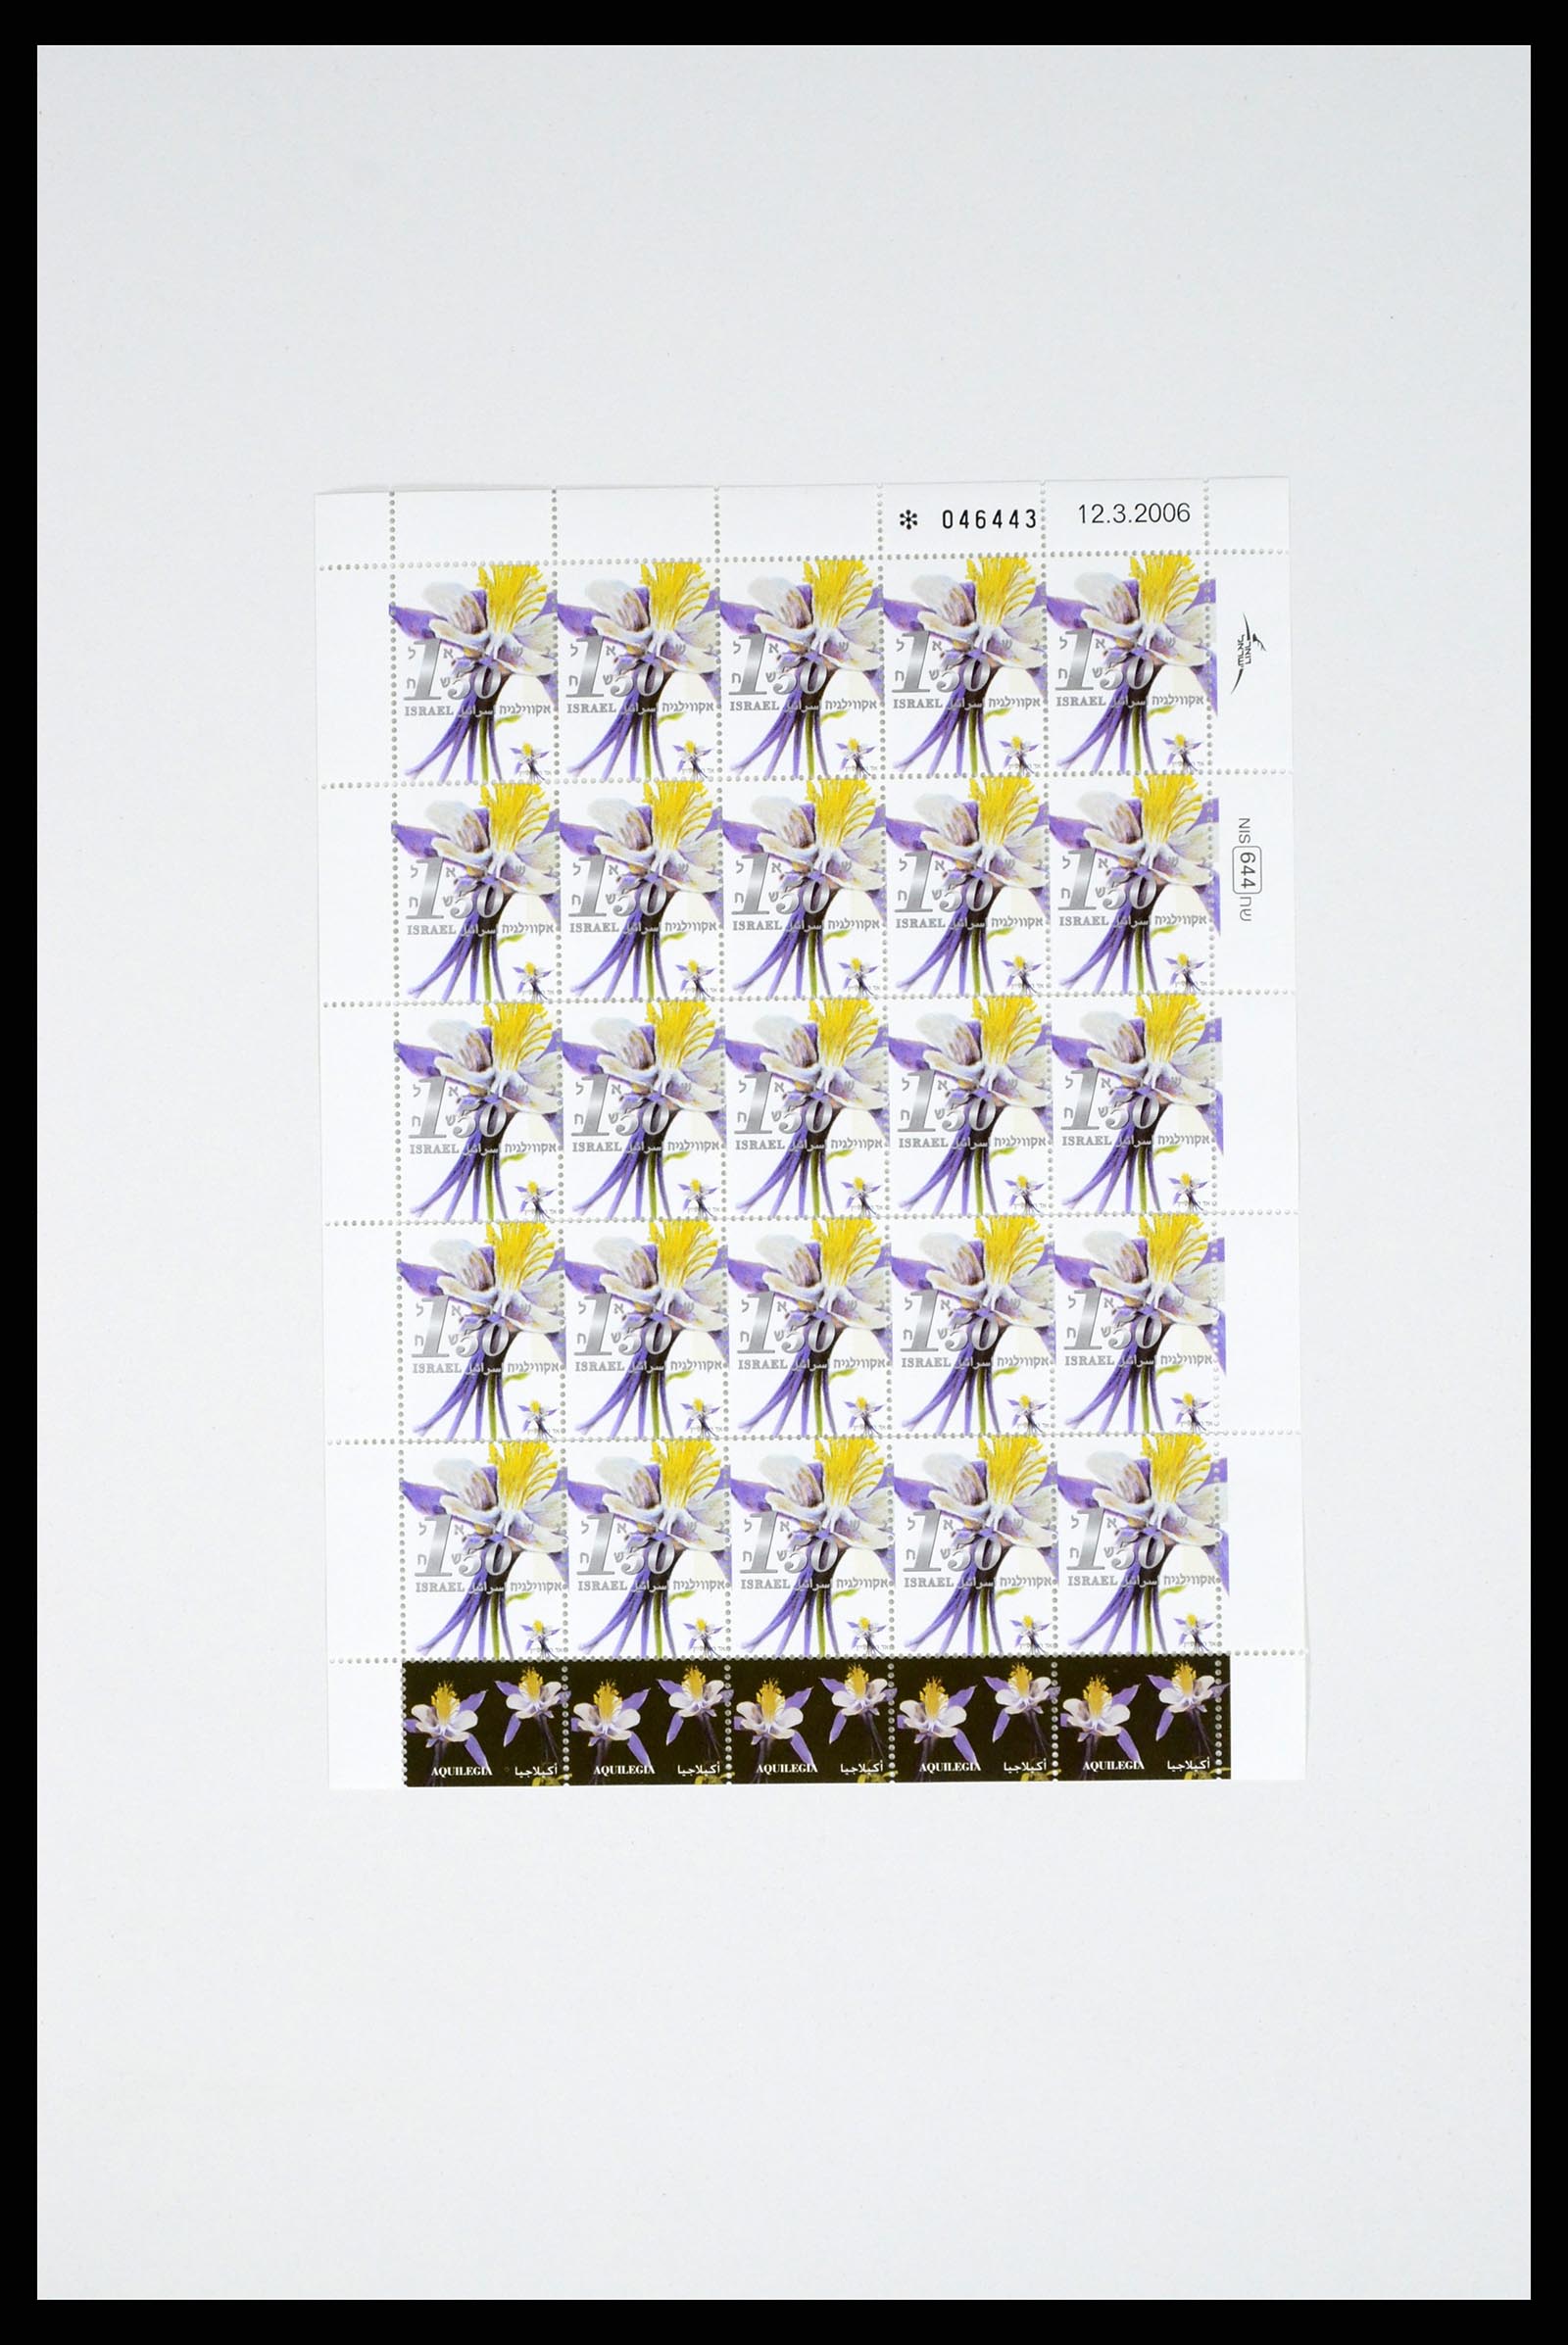 37779 023 - Stamp collection 37779 Israel sheetlets 1986-2009.